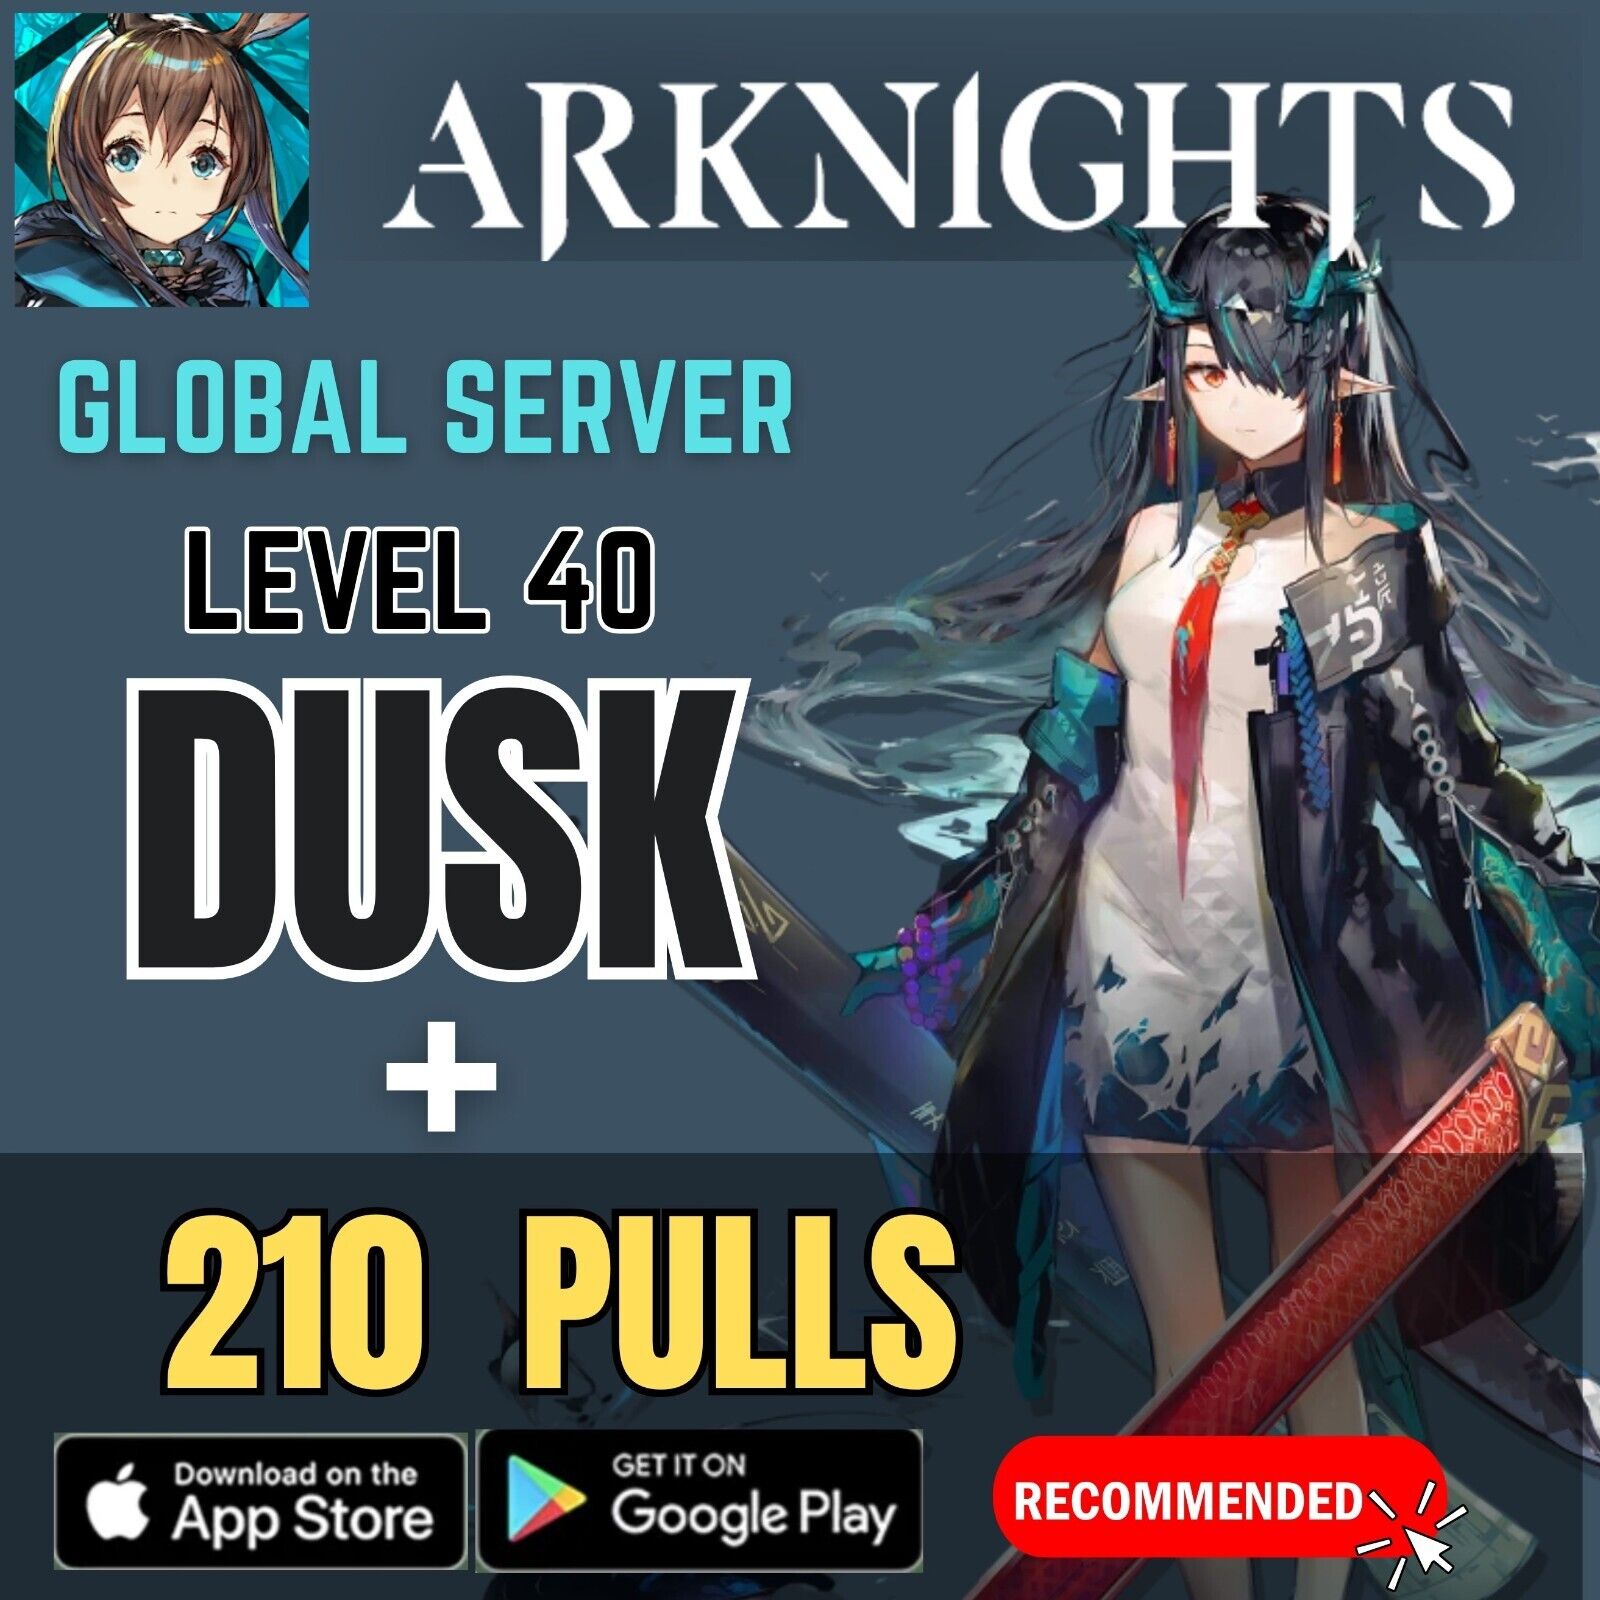 [EN] Arknights Global Dusk + 210 pulls LVL 40